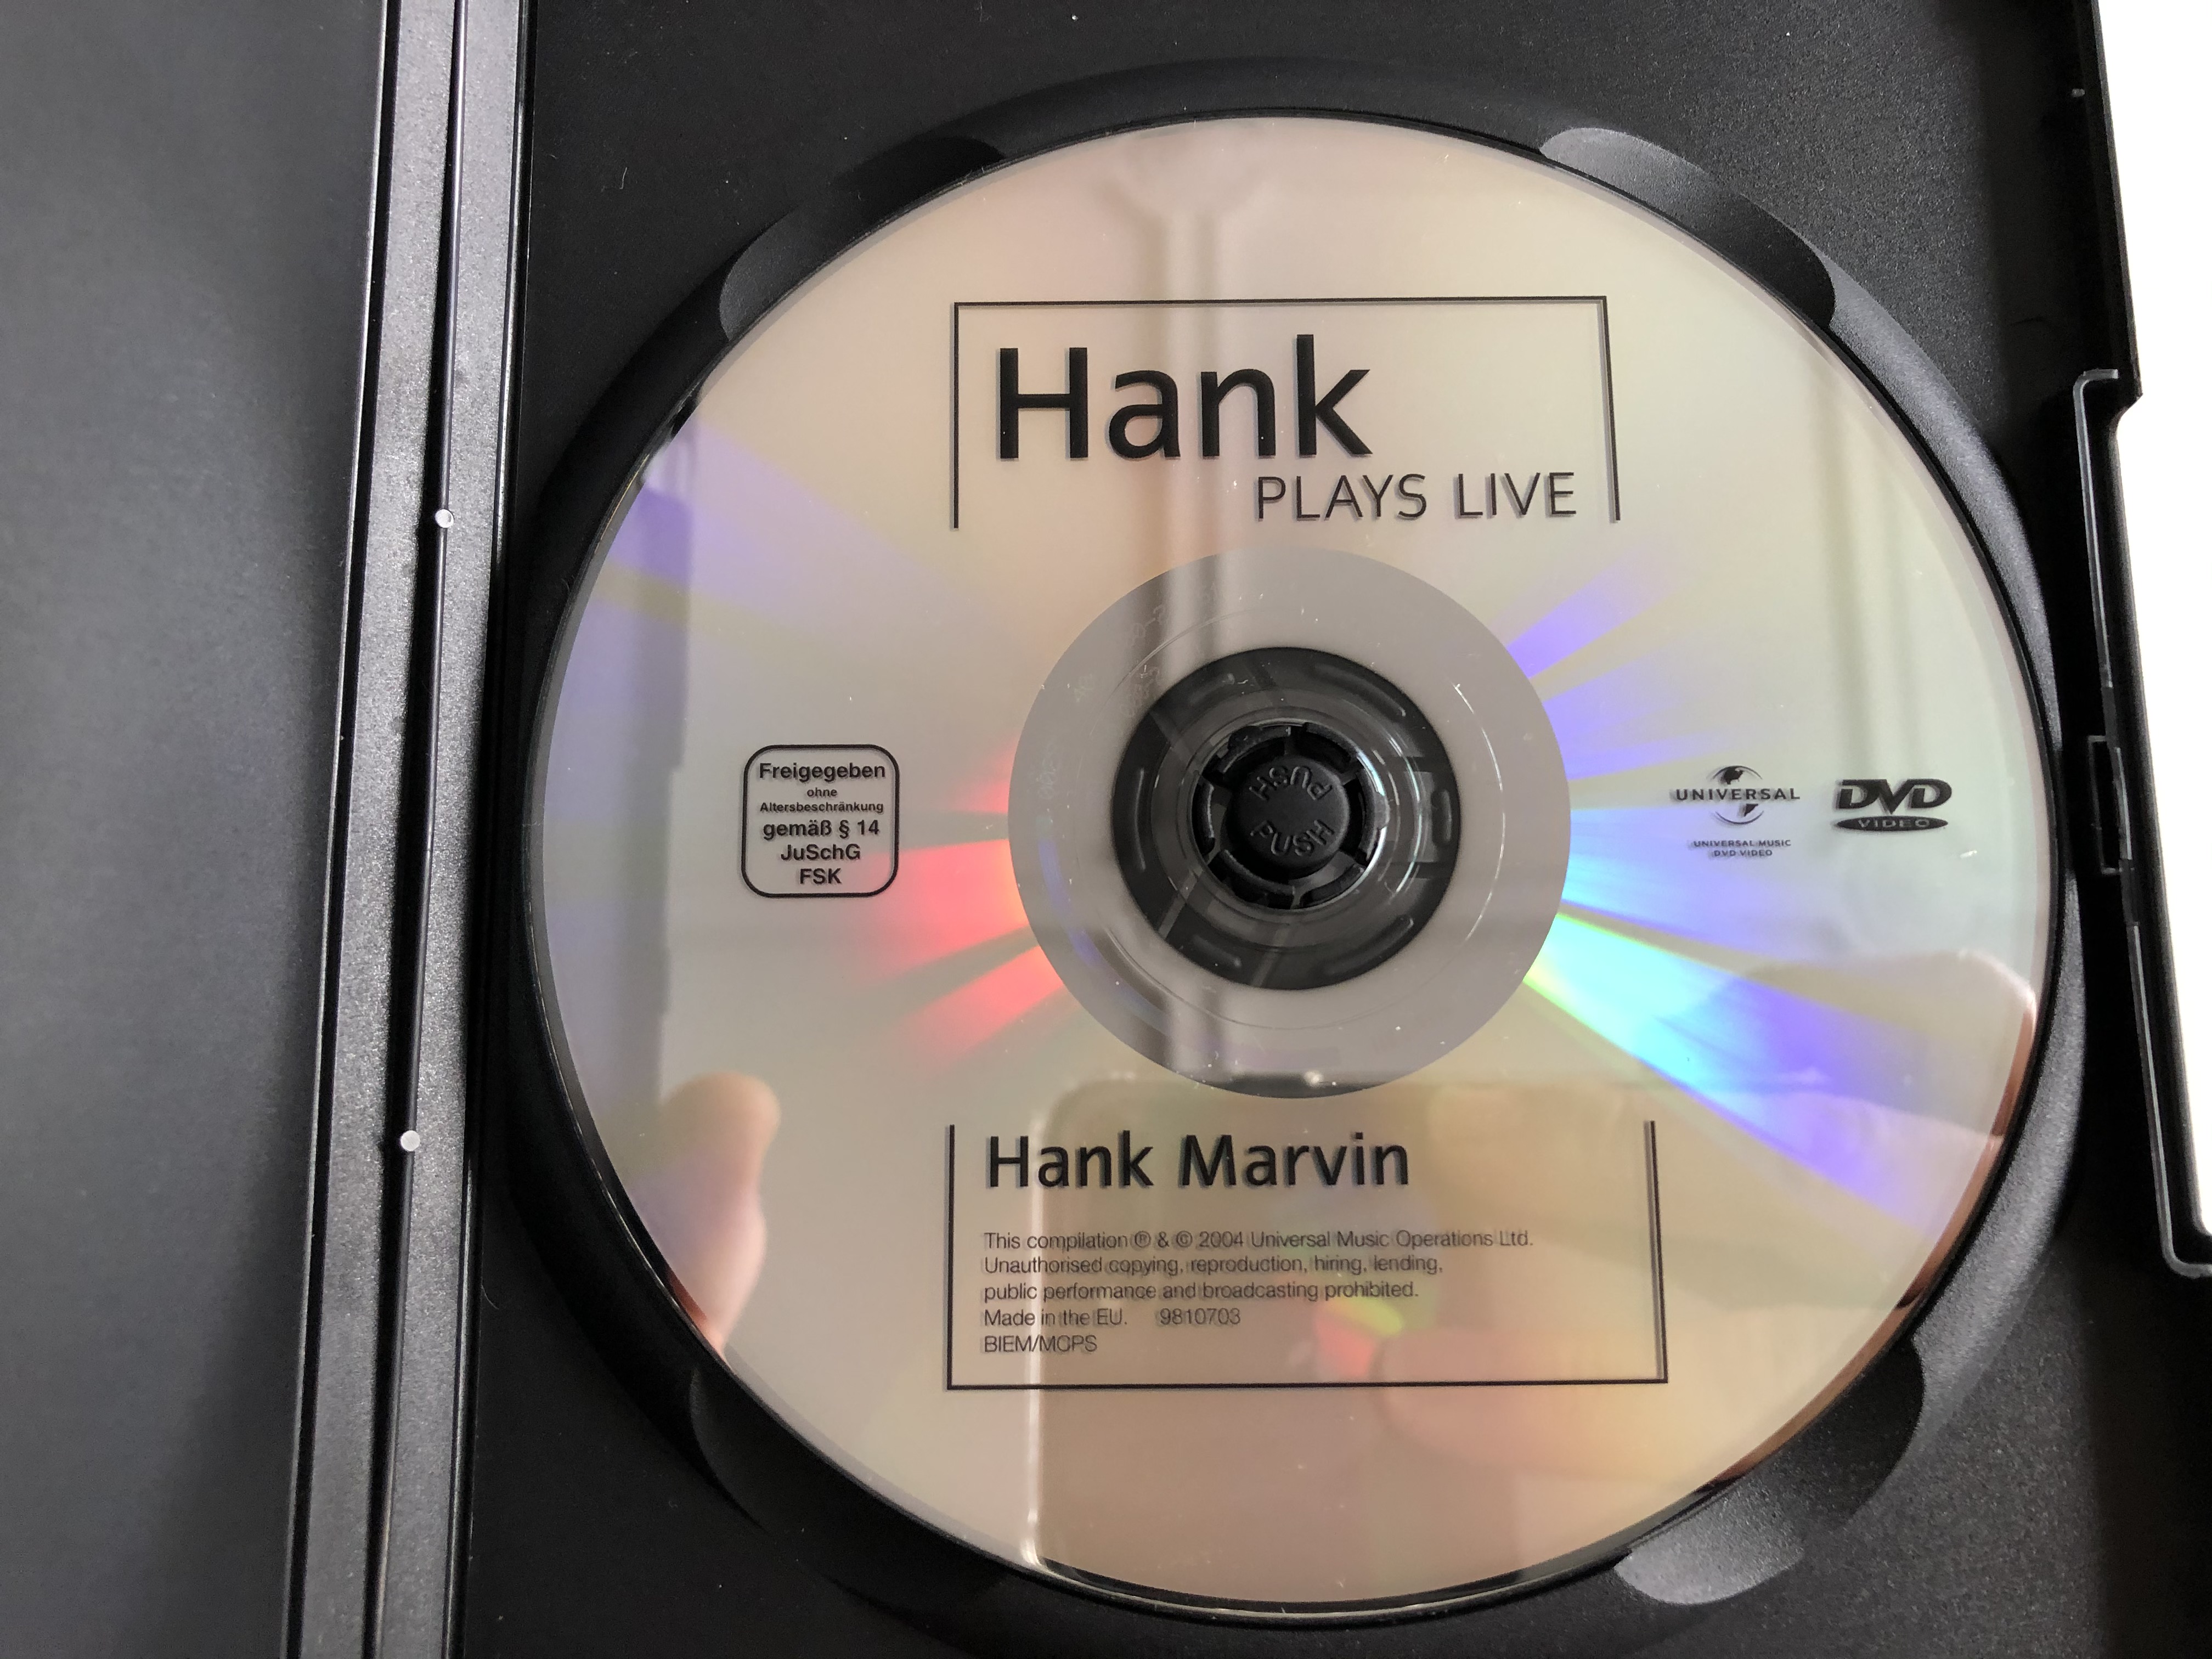 hank-plays-live-dvd-2004-hank-marvin-filmed-live-in-concert-at-the-birmingham-symphony-hall-2.jpg